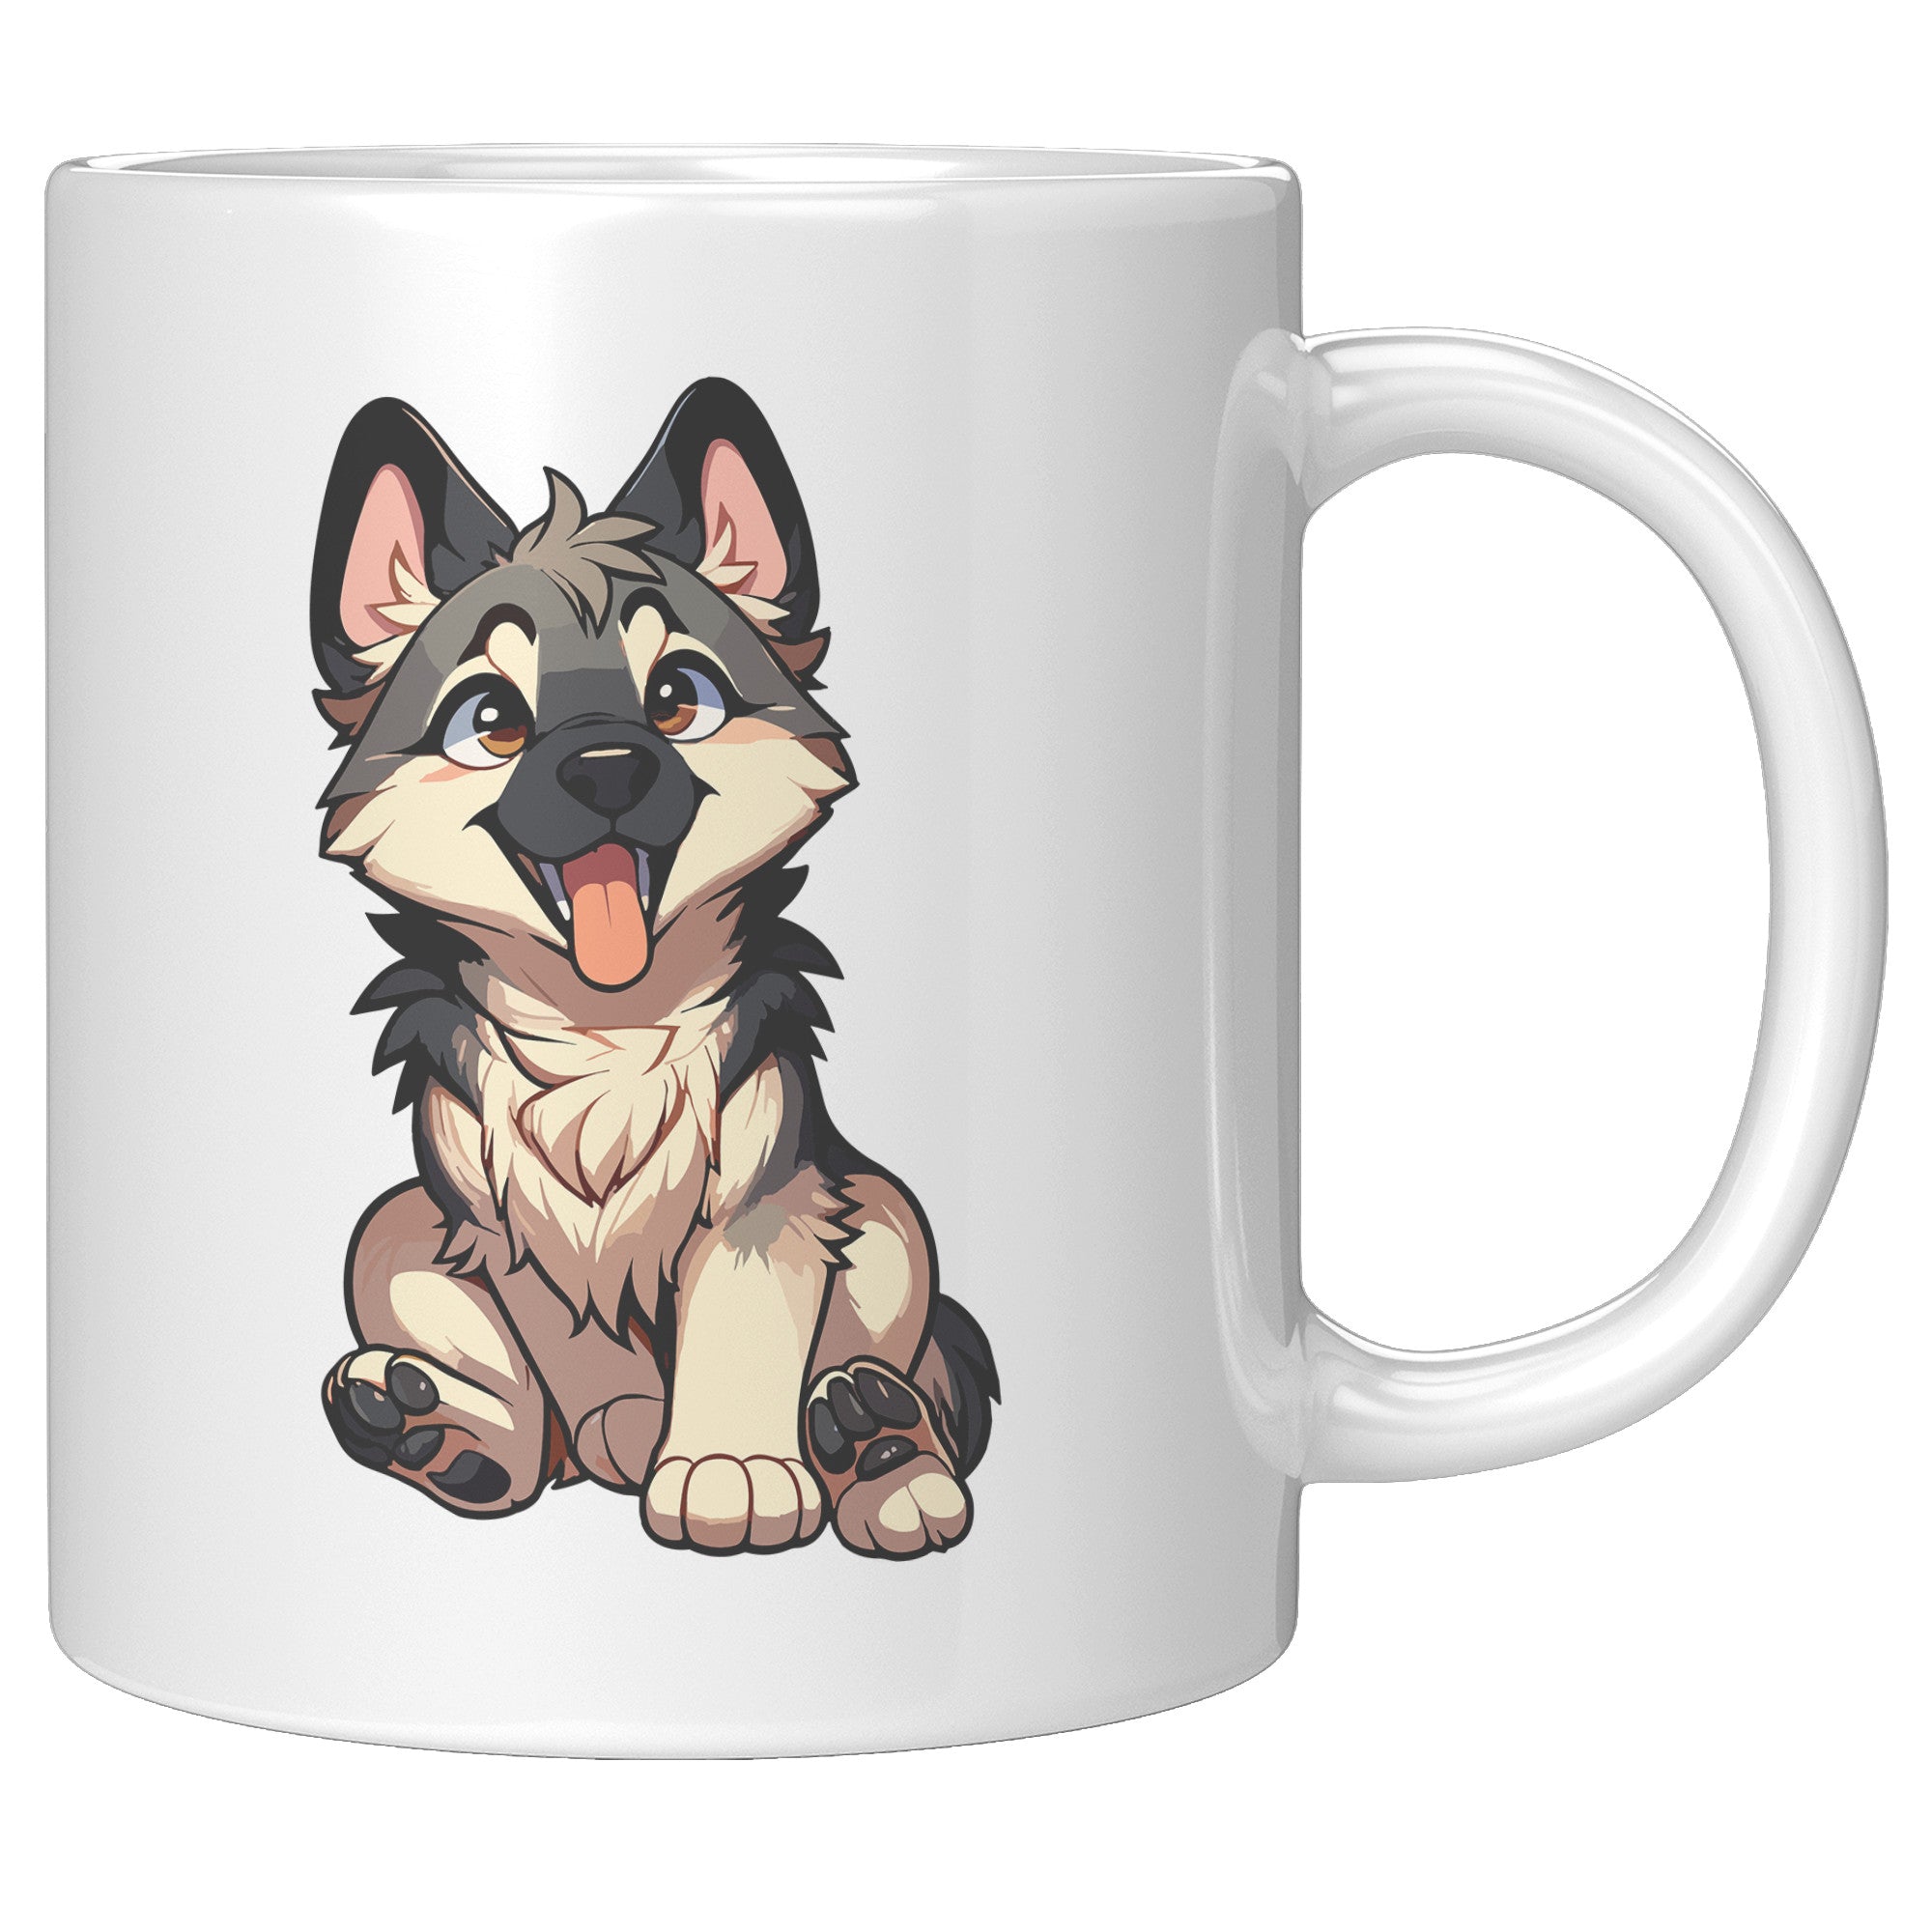 11oz German Shepherd Cartoon Coffee Mug - Loyal GSD Lover Coffee Mug - Perfect Gift for German Shepherd Owners - Protective Dog Breed Coffee Mug - E